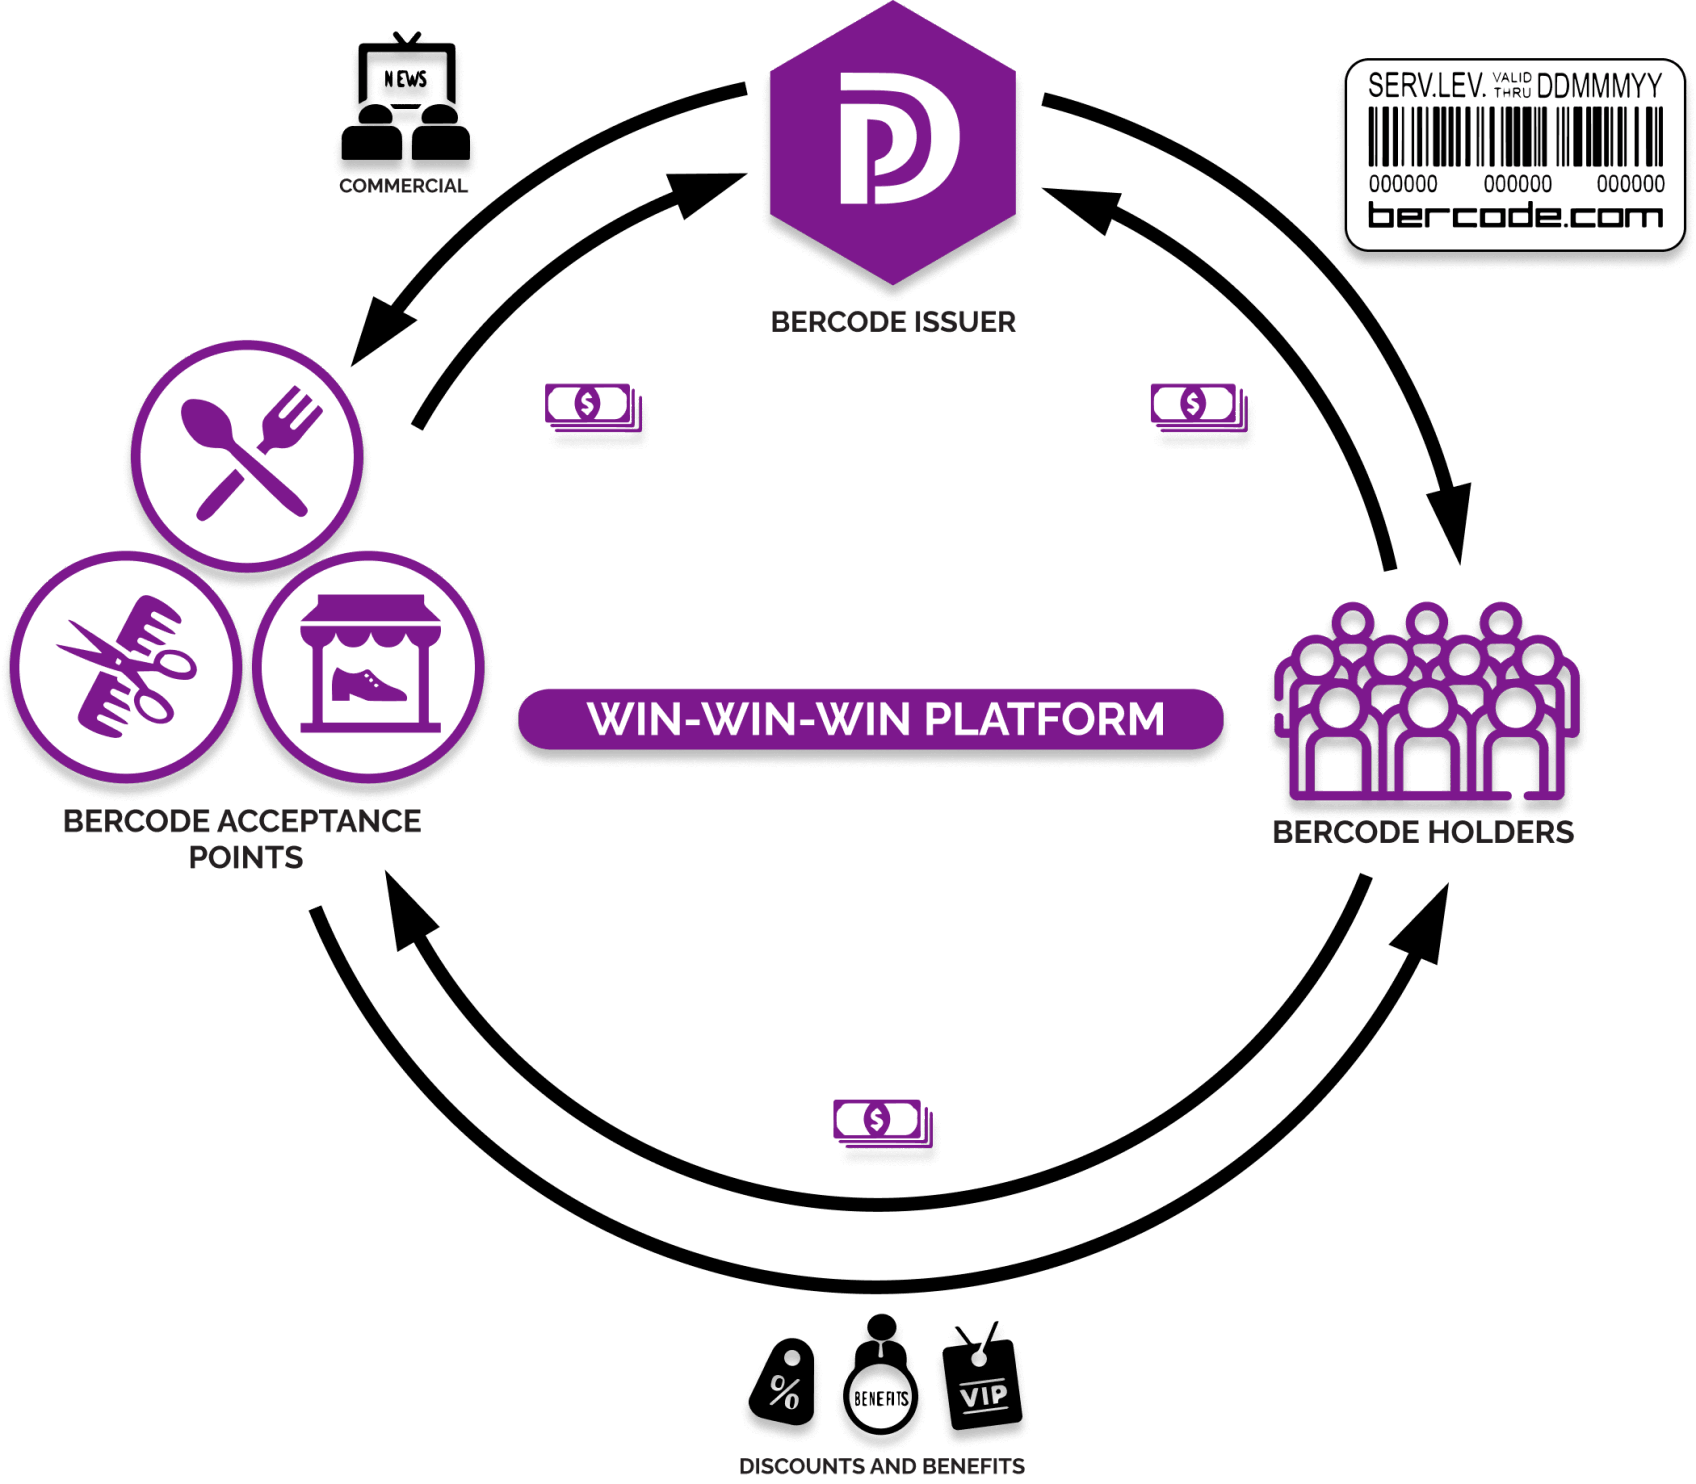 Win-win-win Platform